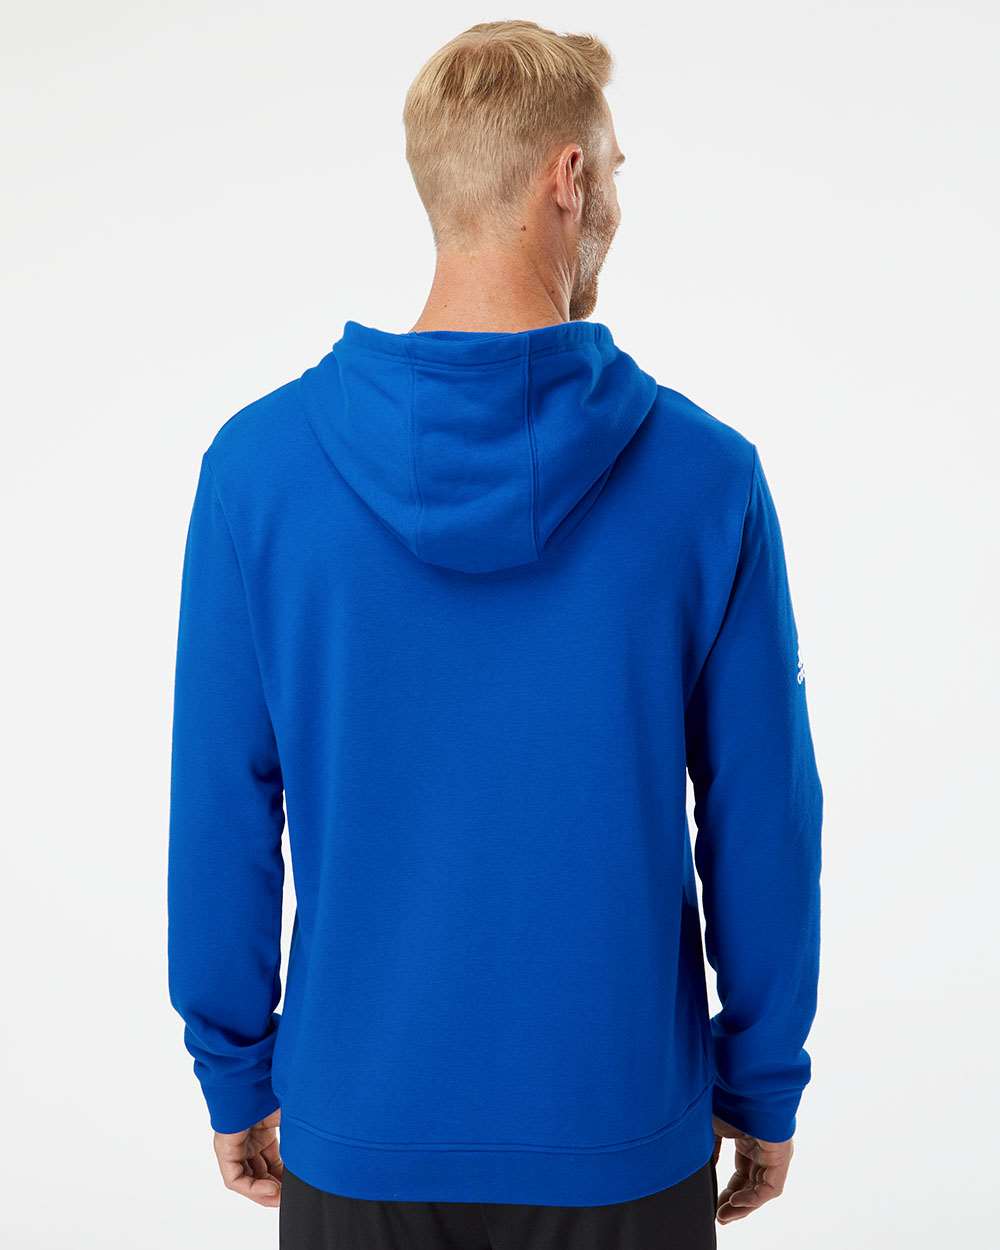 Adidas Fleece Hooded Sweatshirt #A432 Royal Blue Back